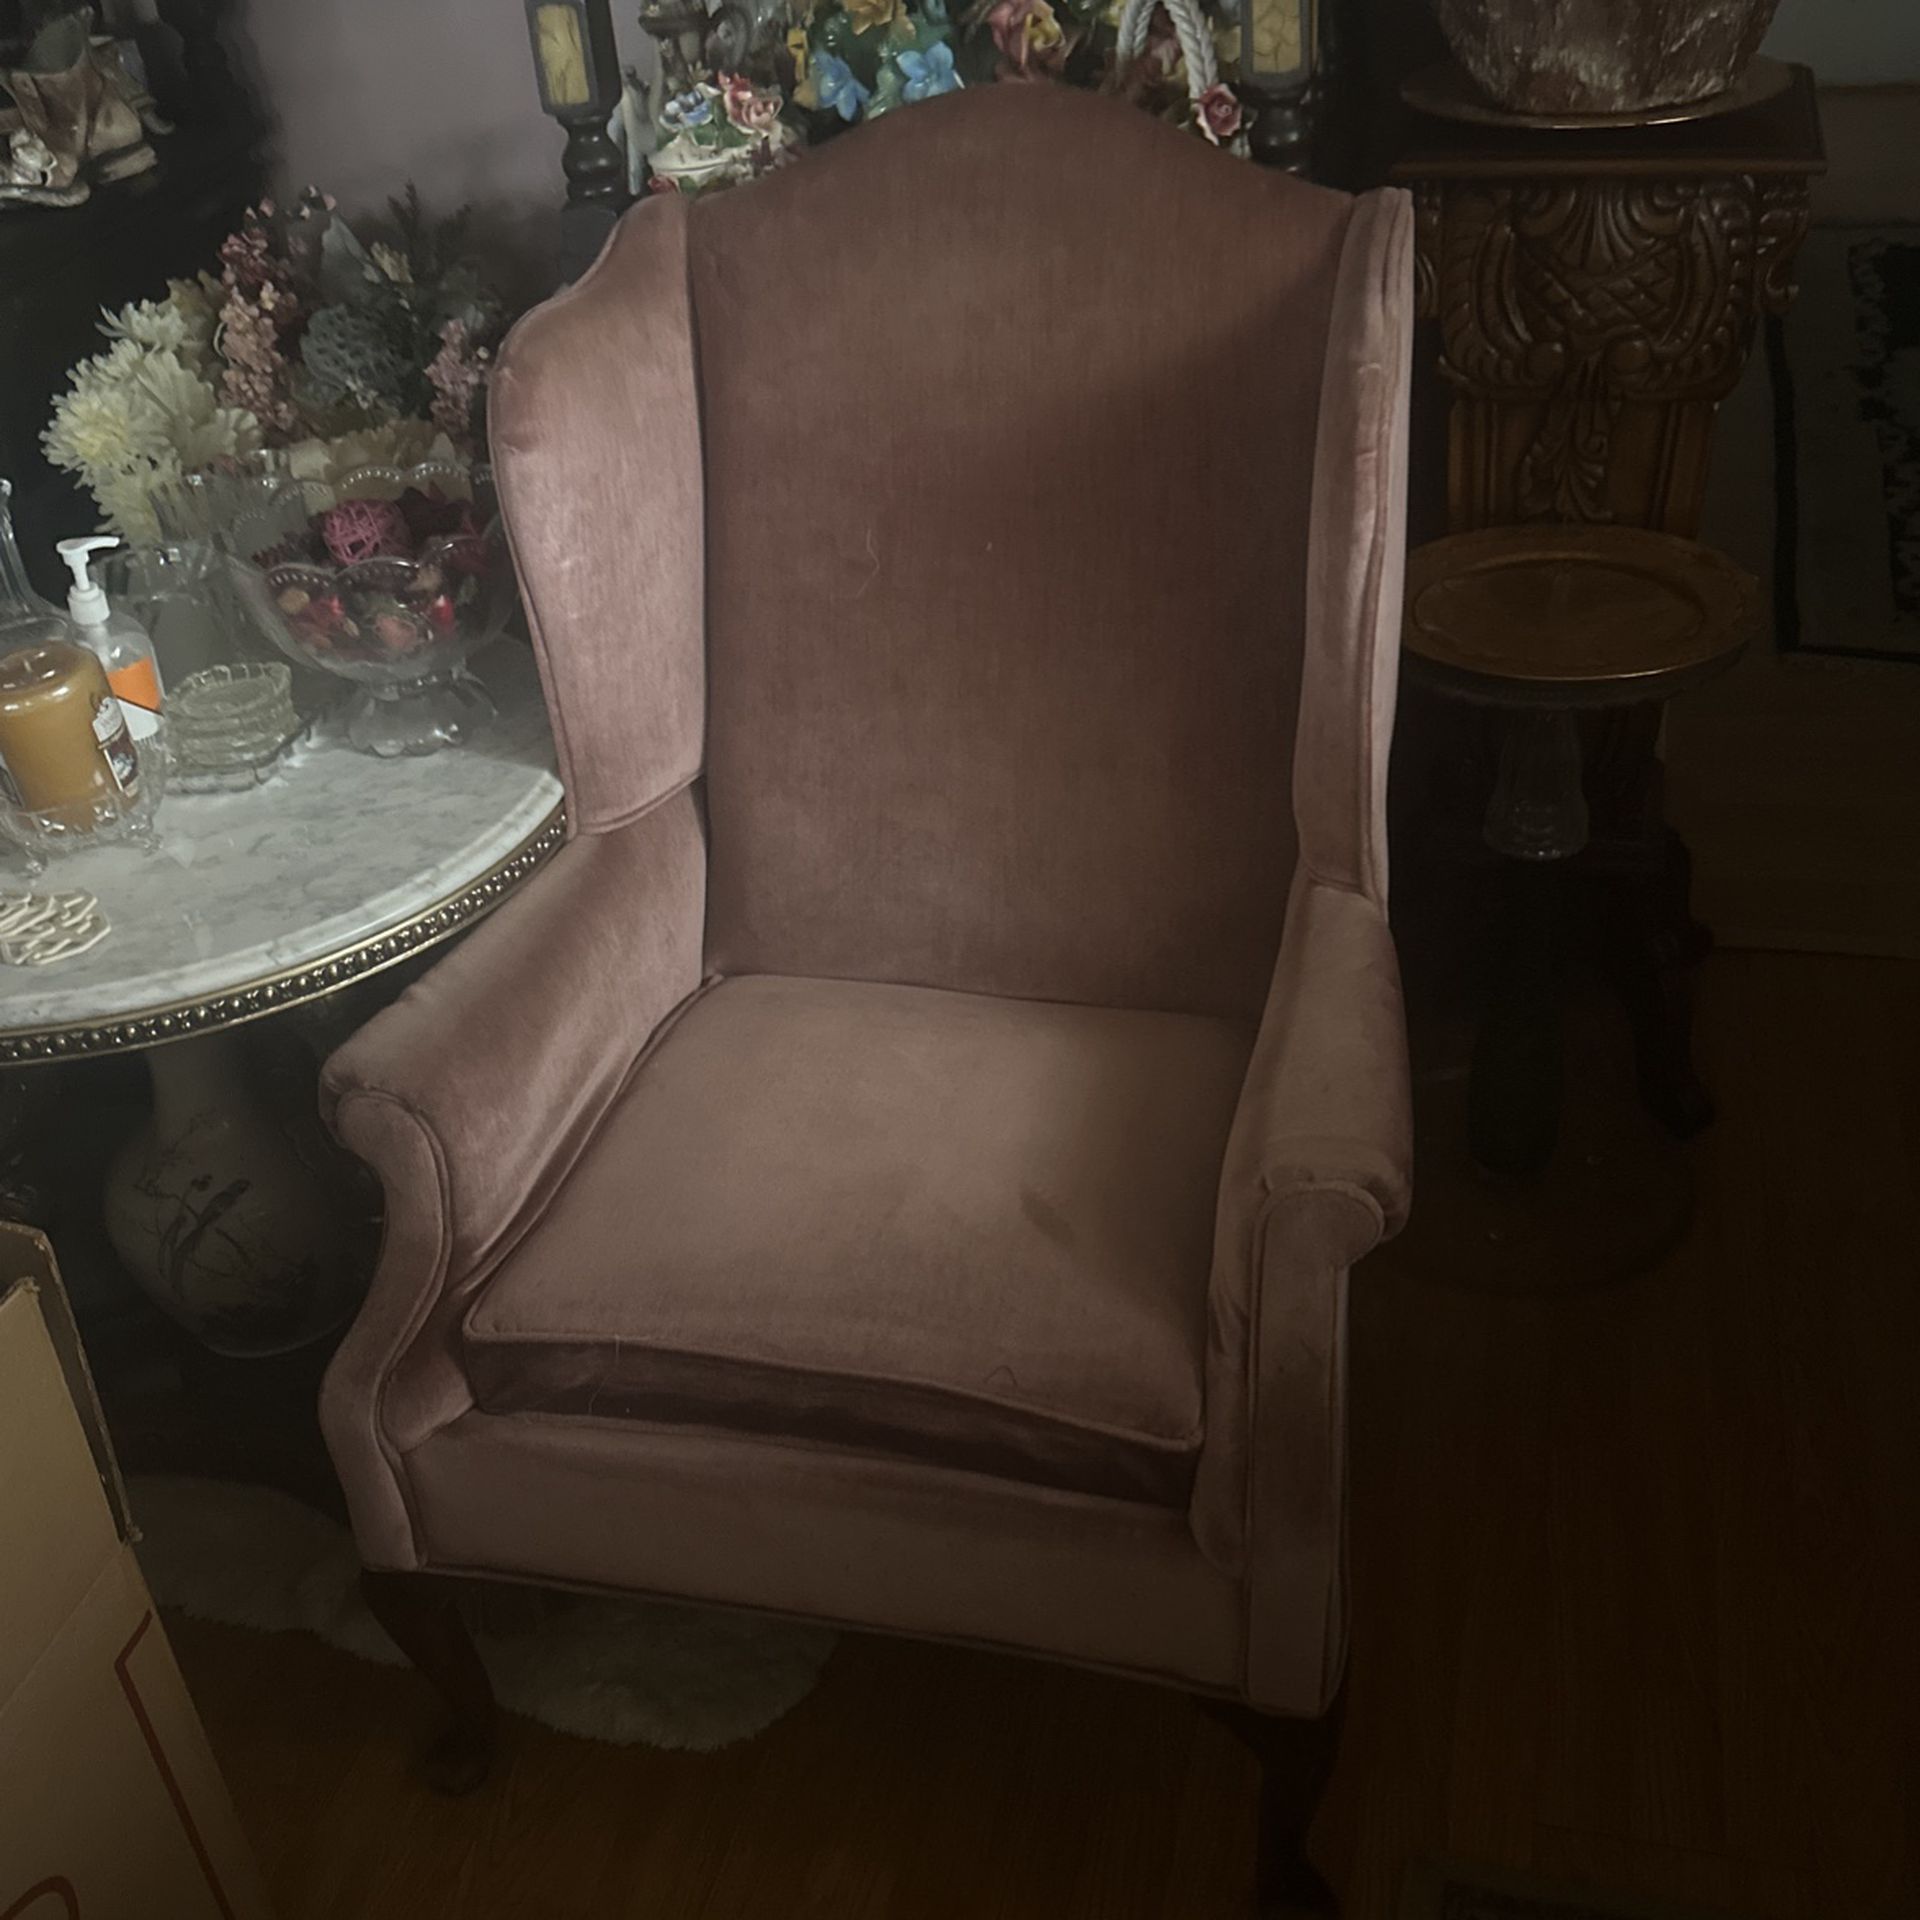 Antique Furniture Chair